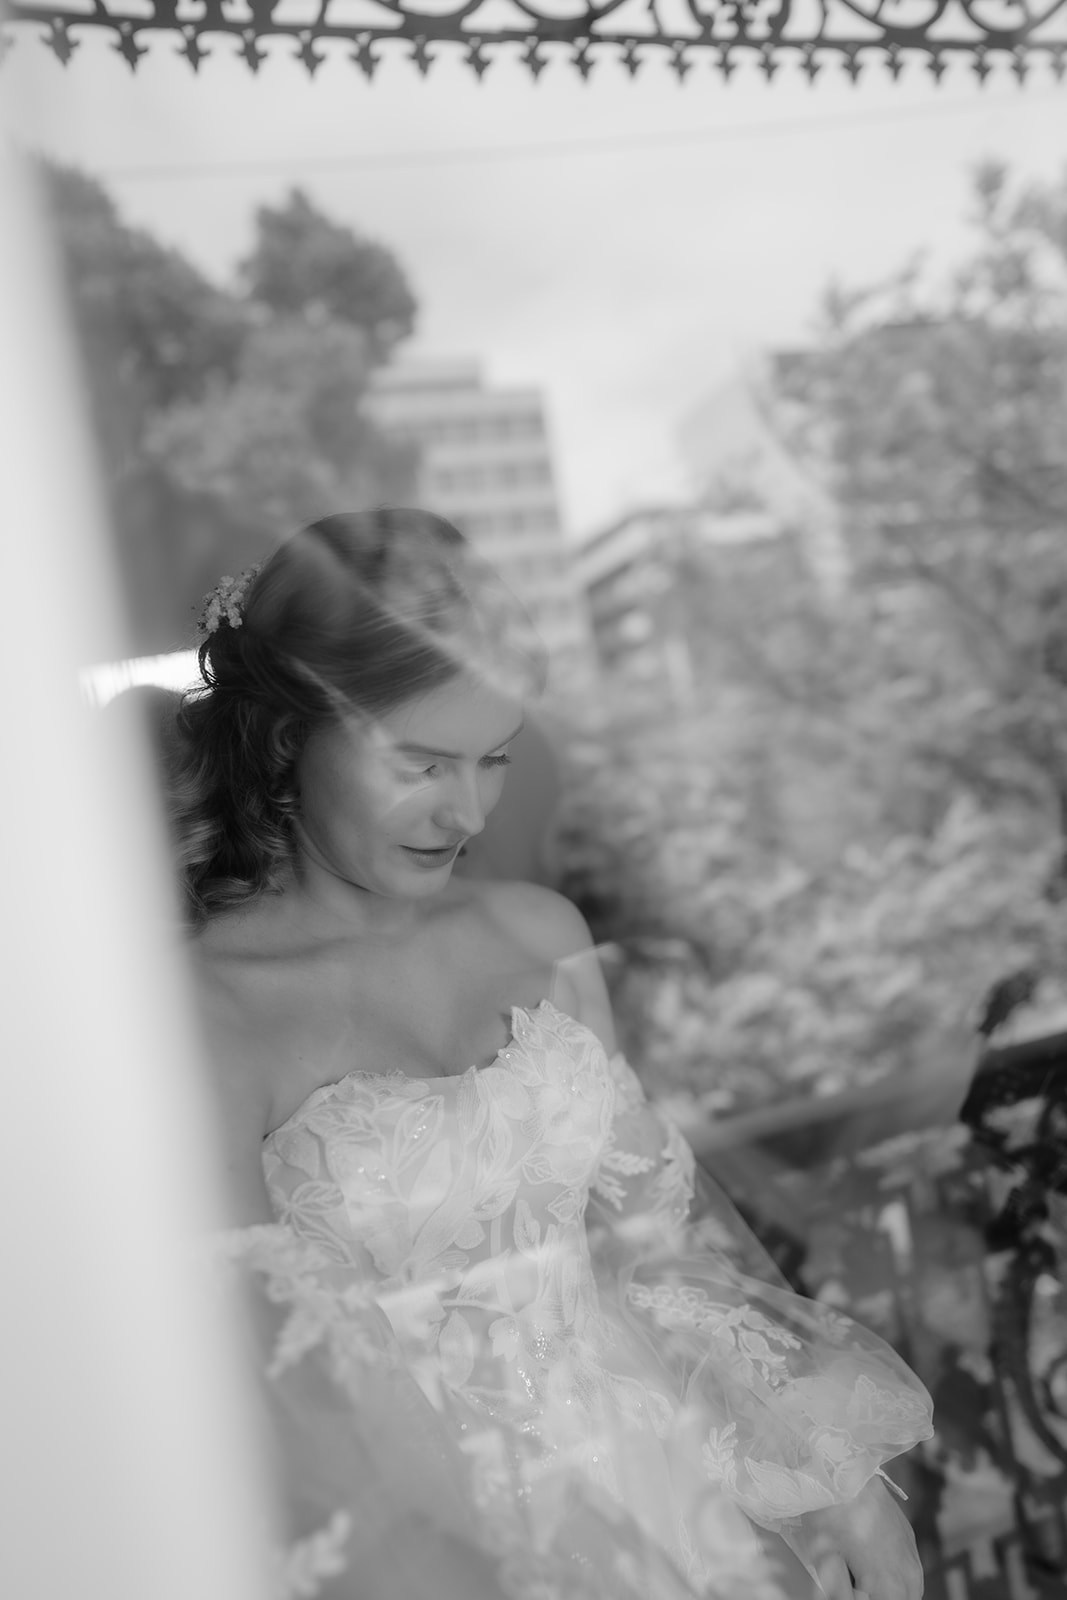 Bride radiant in flowing wedding dress, captured through window.